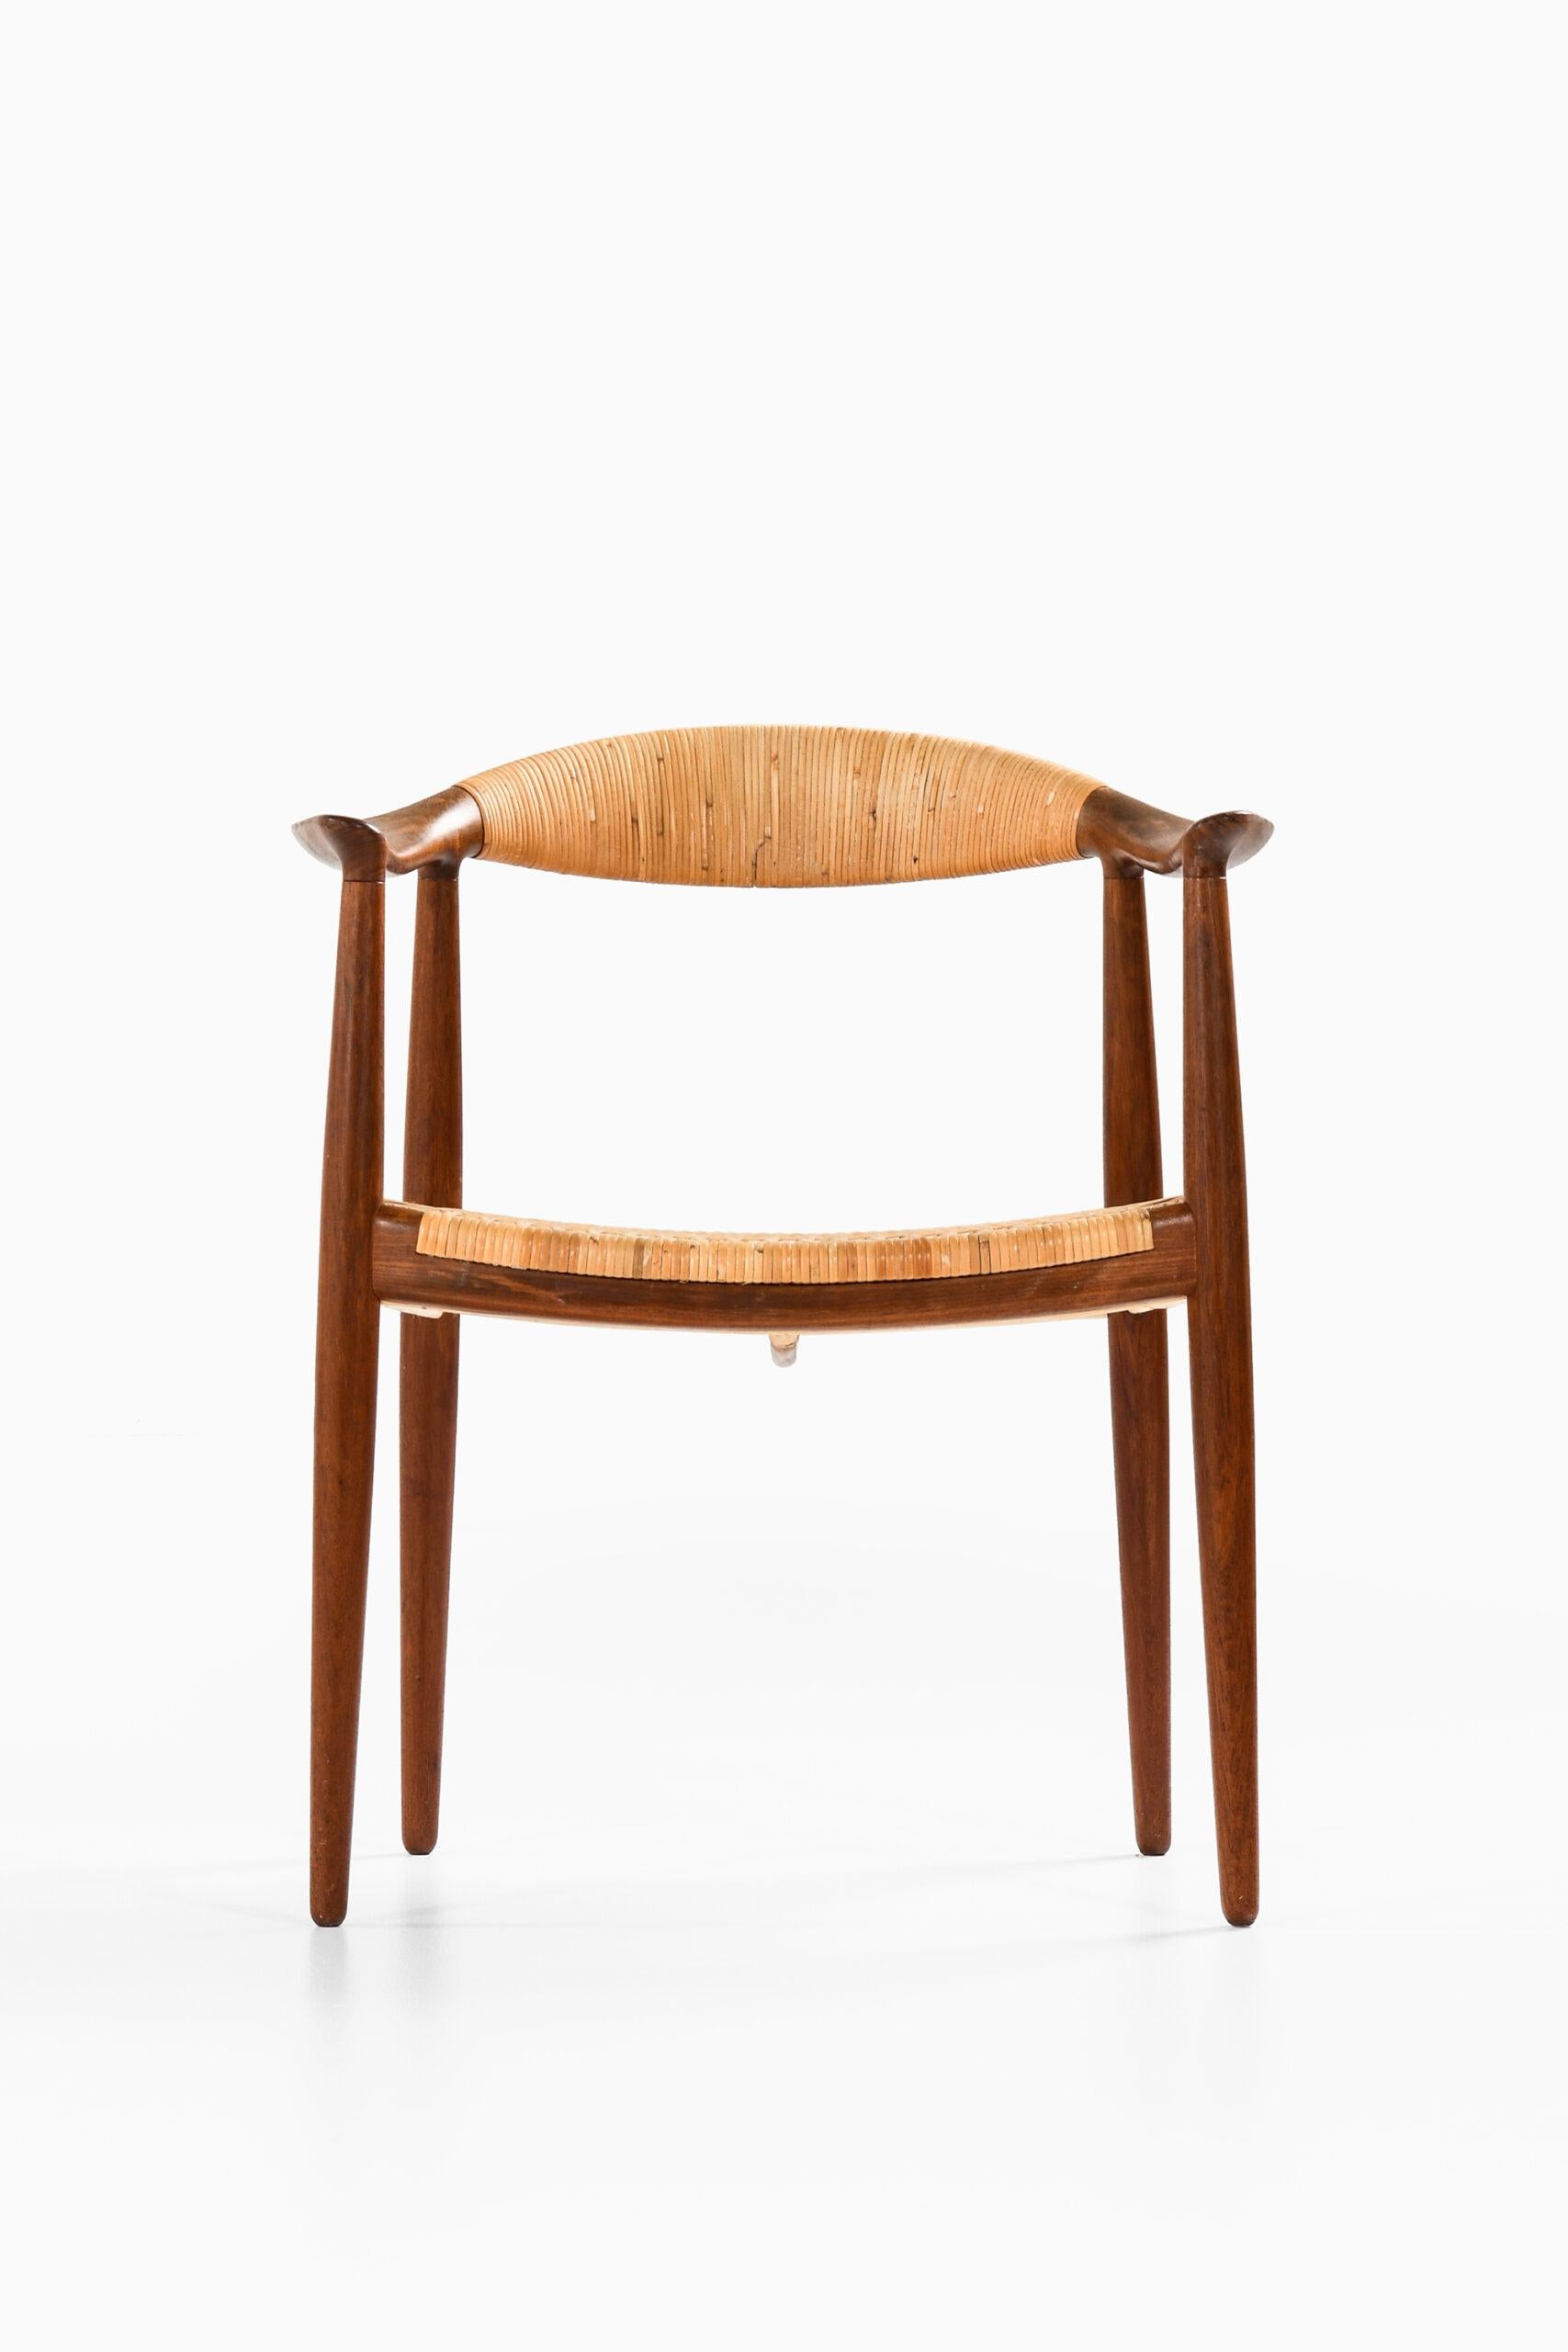 Rare armchair model JH-501 / The Chair designed by Hans Wegner. Produced by Johannes Hansen in Denmark.